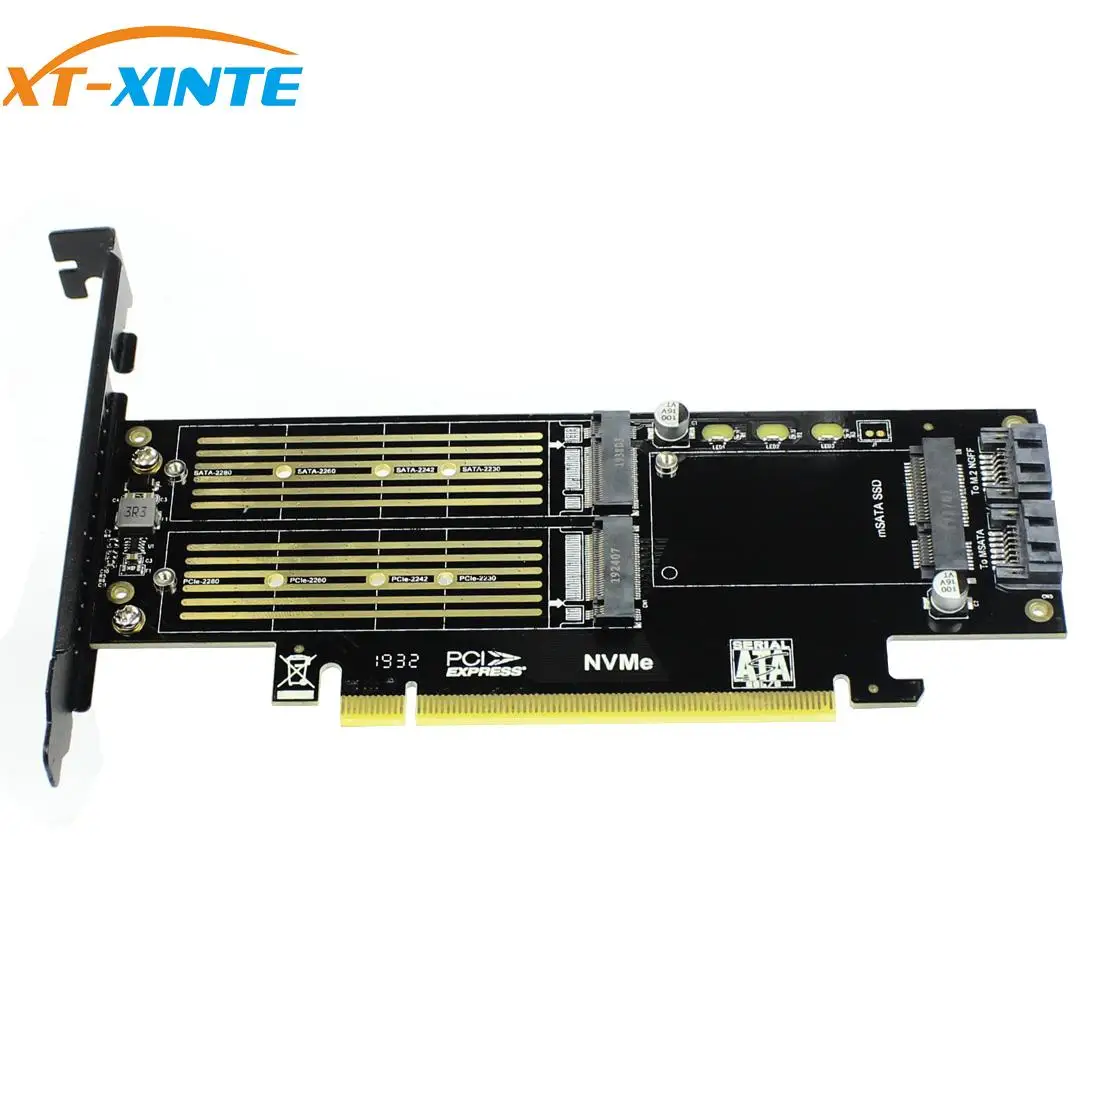 M-Tasten B-Tasten mSATA M. 2 for NVMe NGFF SSD for at PCIE 3.0 X16-Adapter PCI Express 3.0 m2 SSD AHCI mSATA 3i 1 riser card Converter